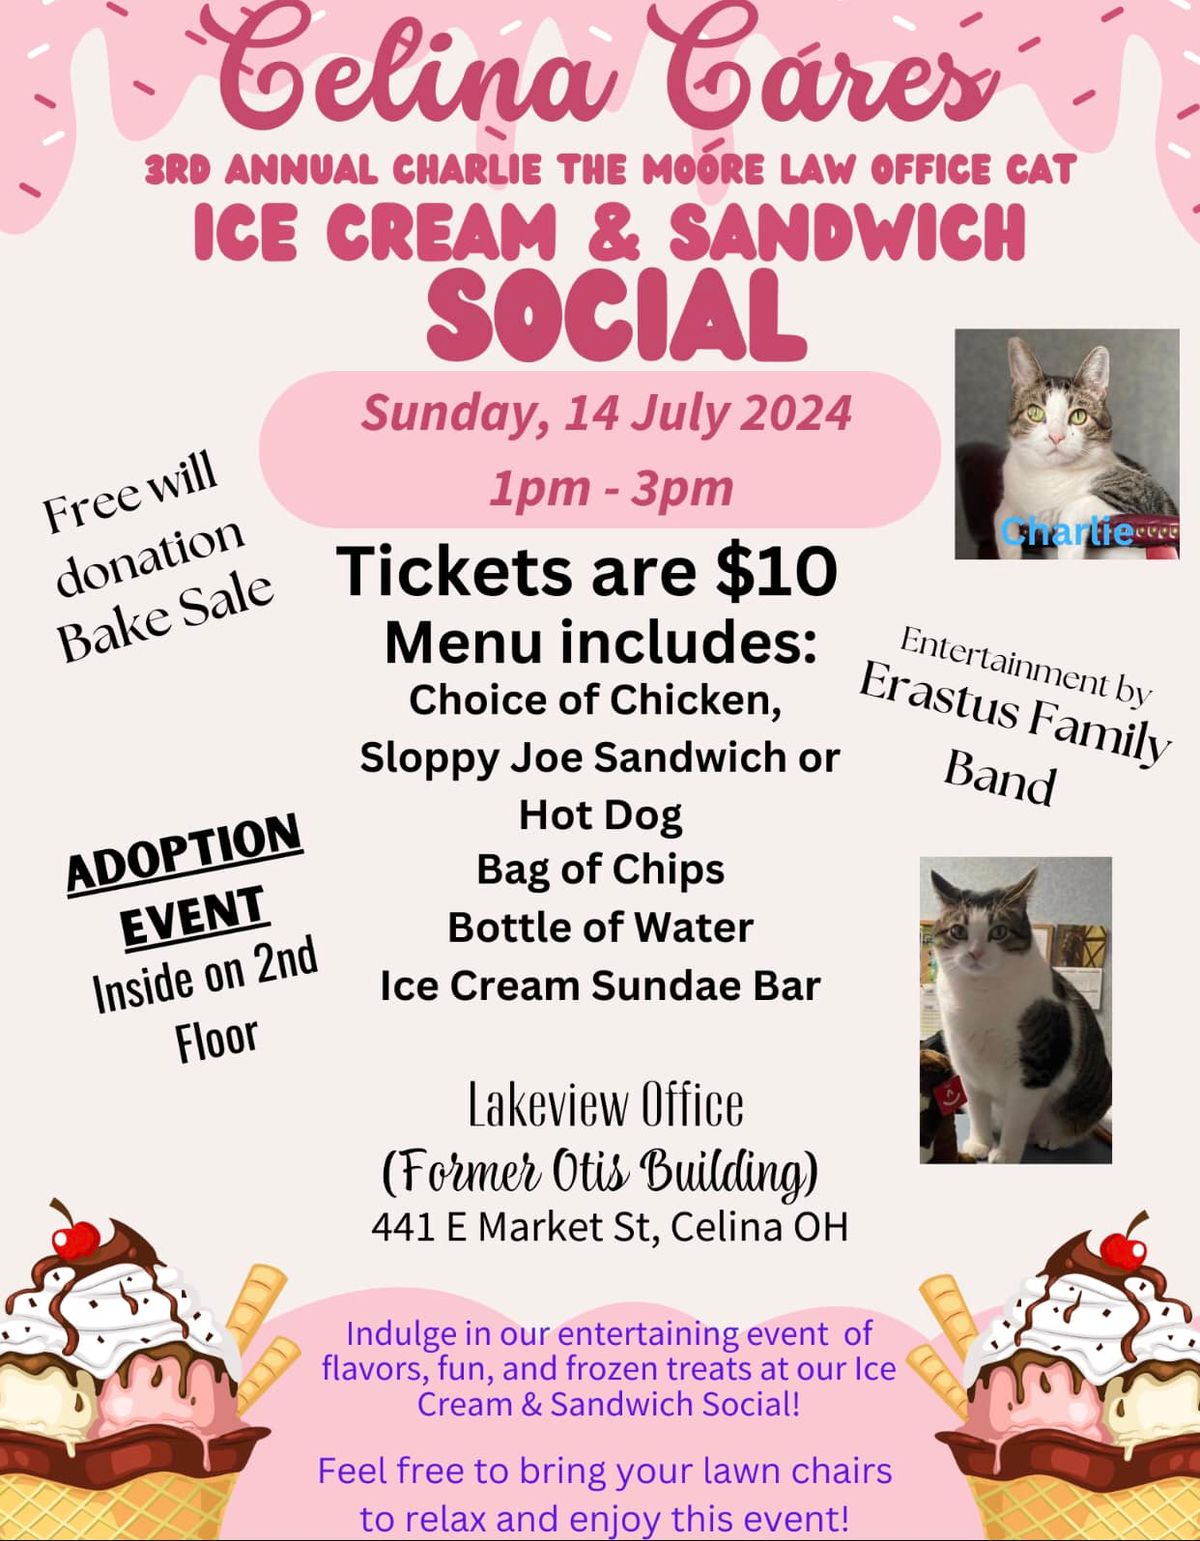 Erastus Family Band LIVE @ Celina Cares' "Charlie Ice Cream Fundraiser" (Sun. July 14, 2024, 1-3 PM)